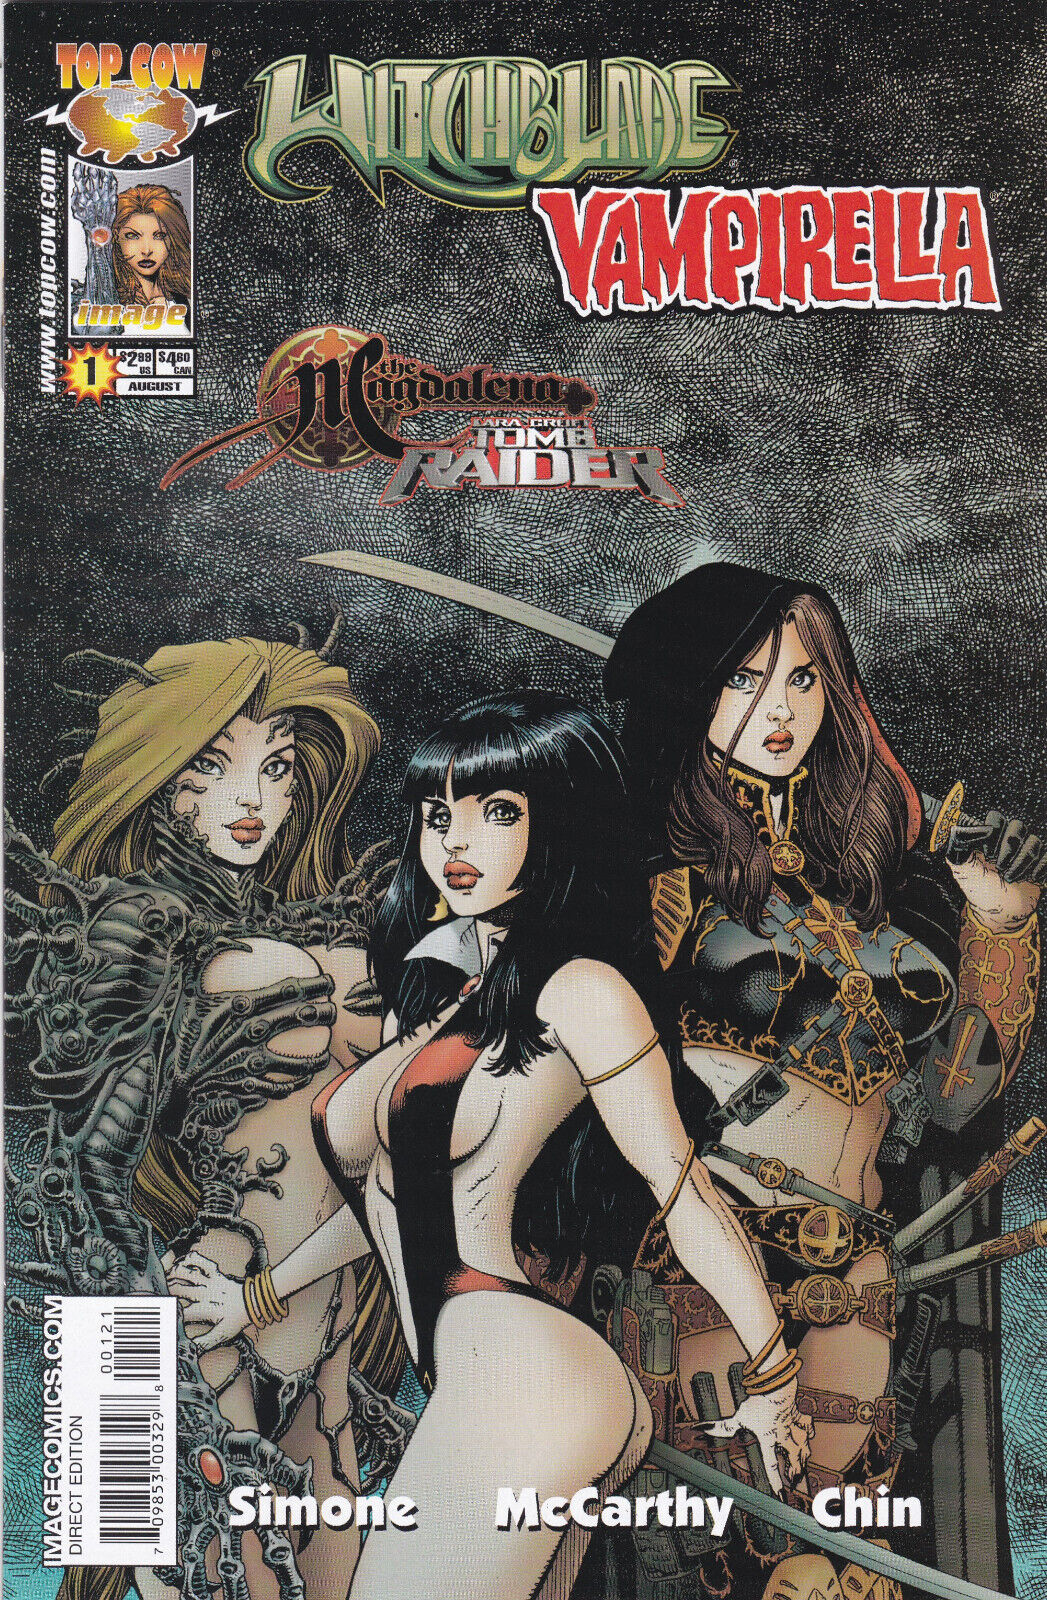 Witchblade Vampirella Magdalena #1 Art Adams Top Cow Comics 2005 High Grade